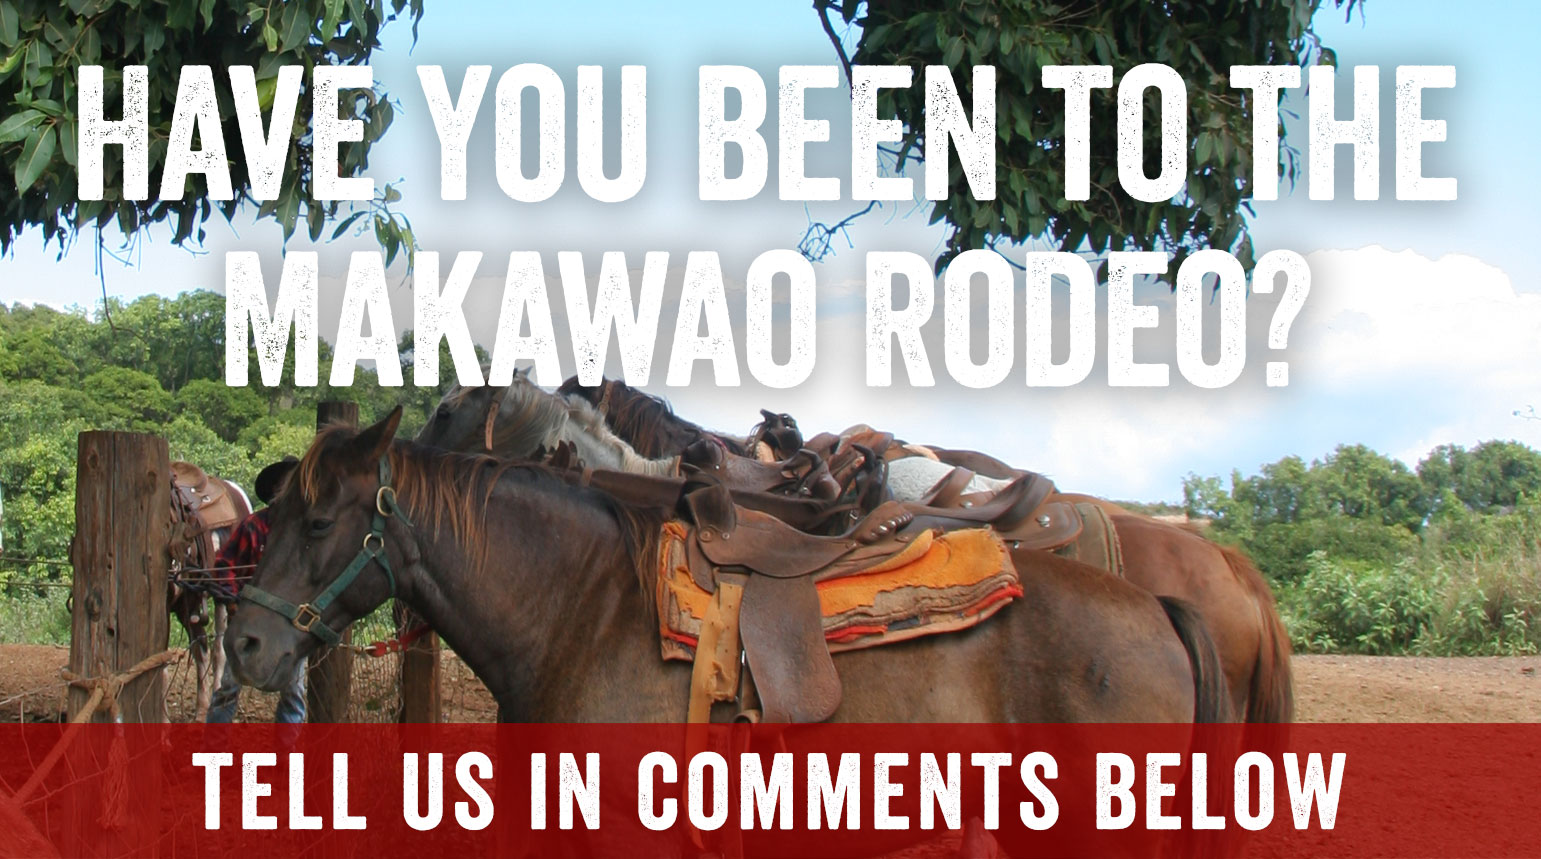 Makawao rodeo